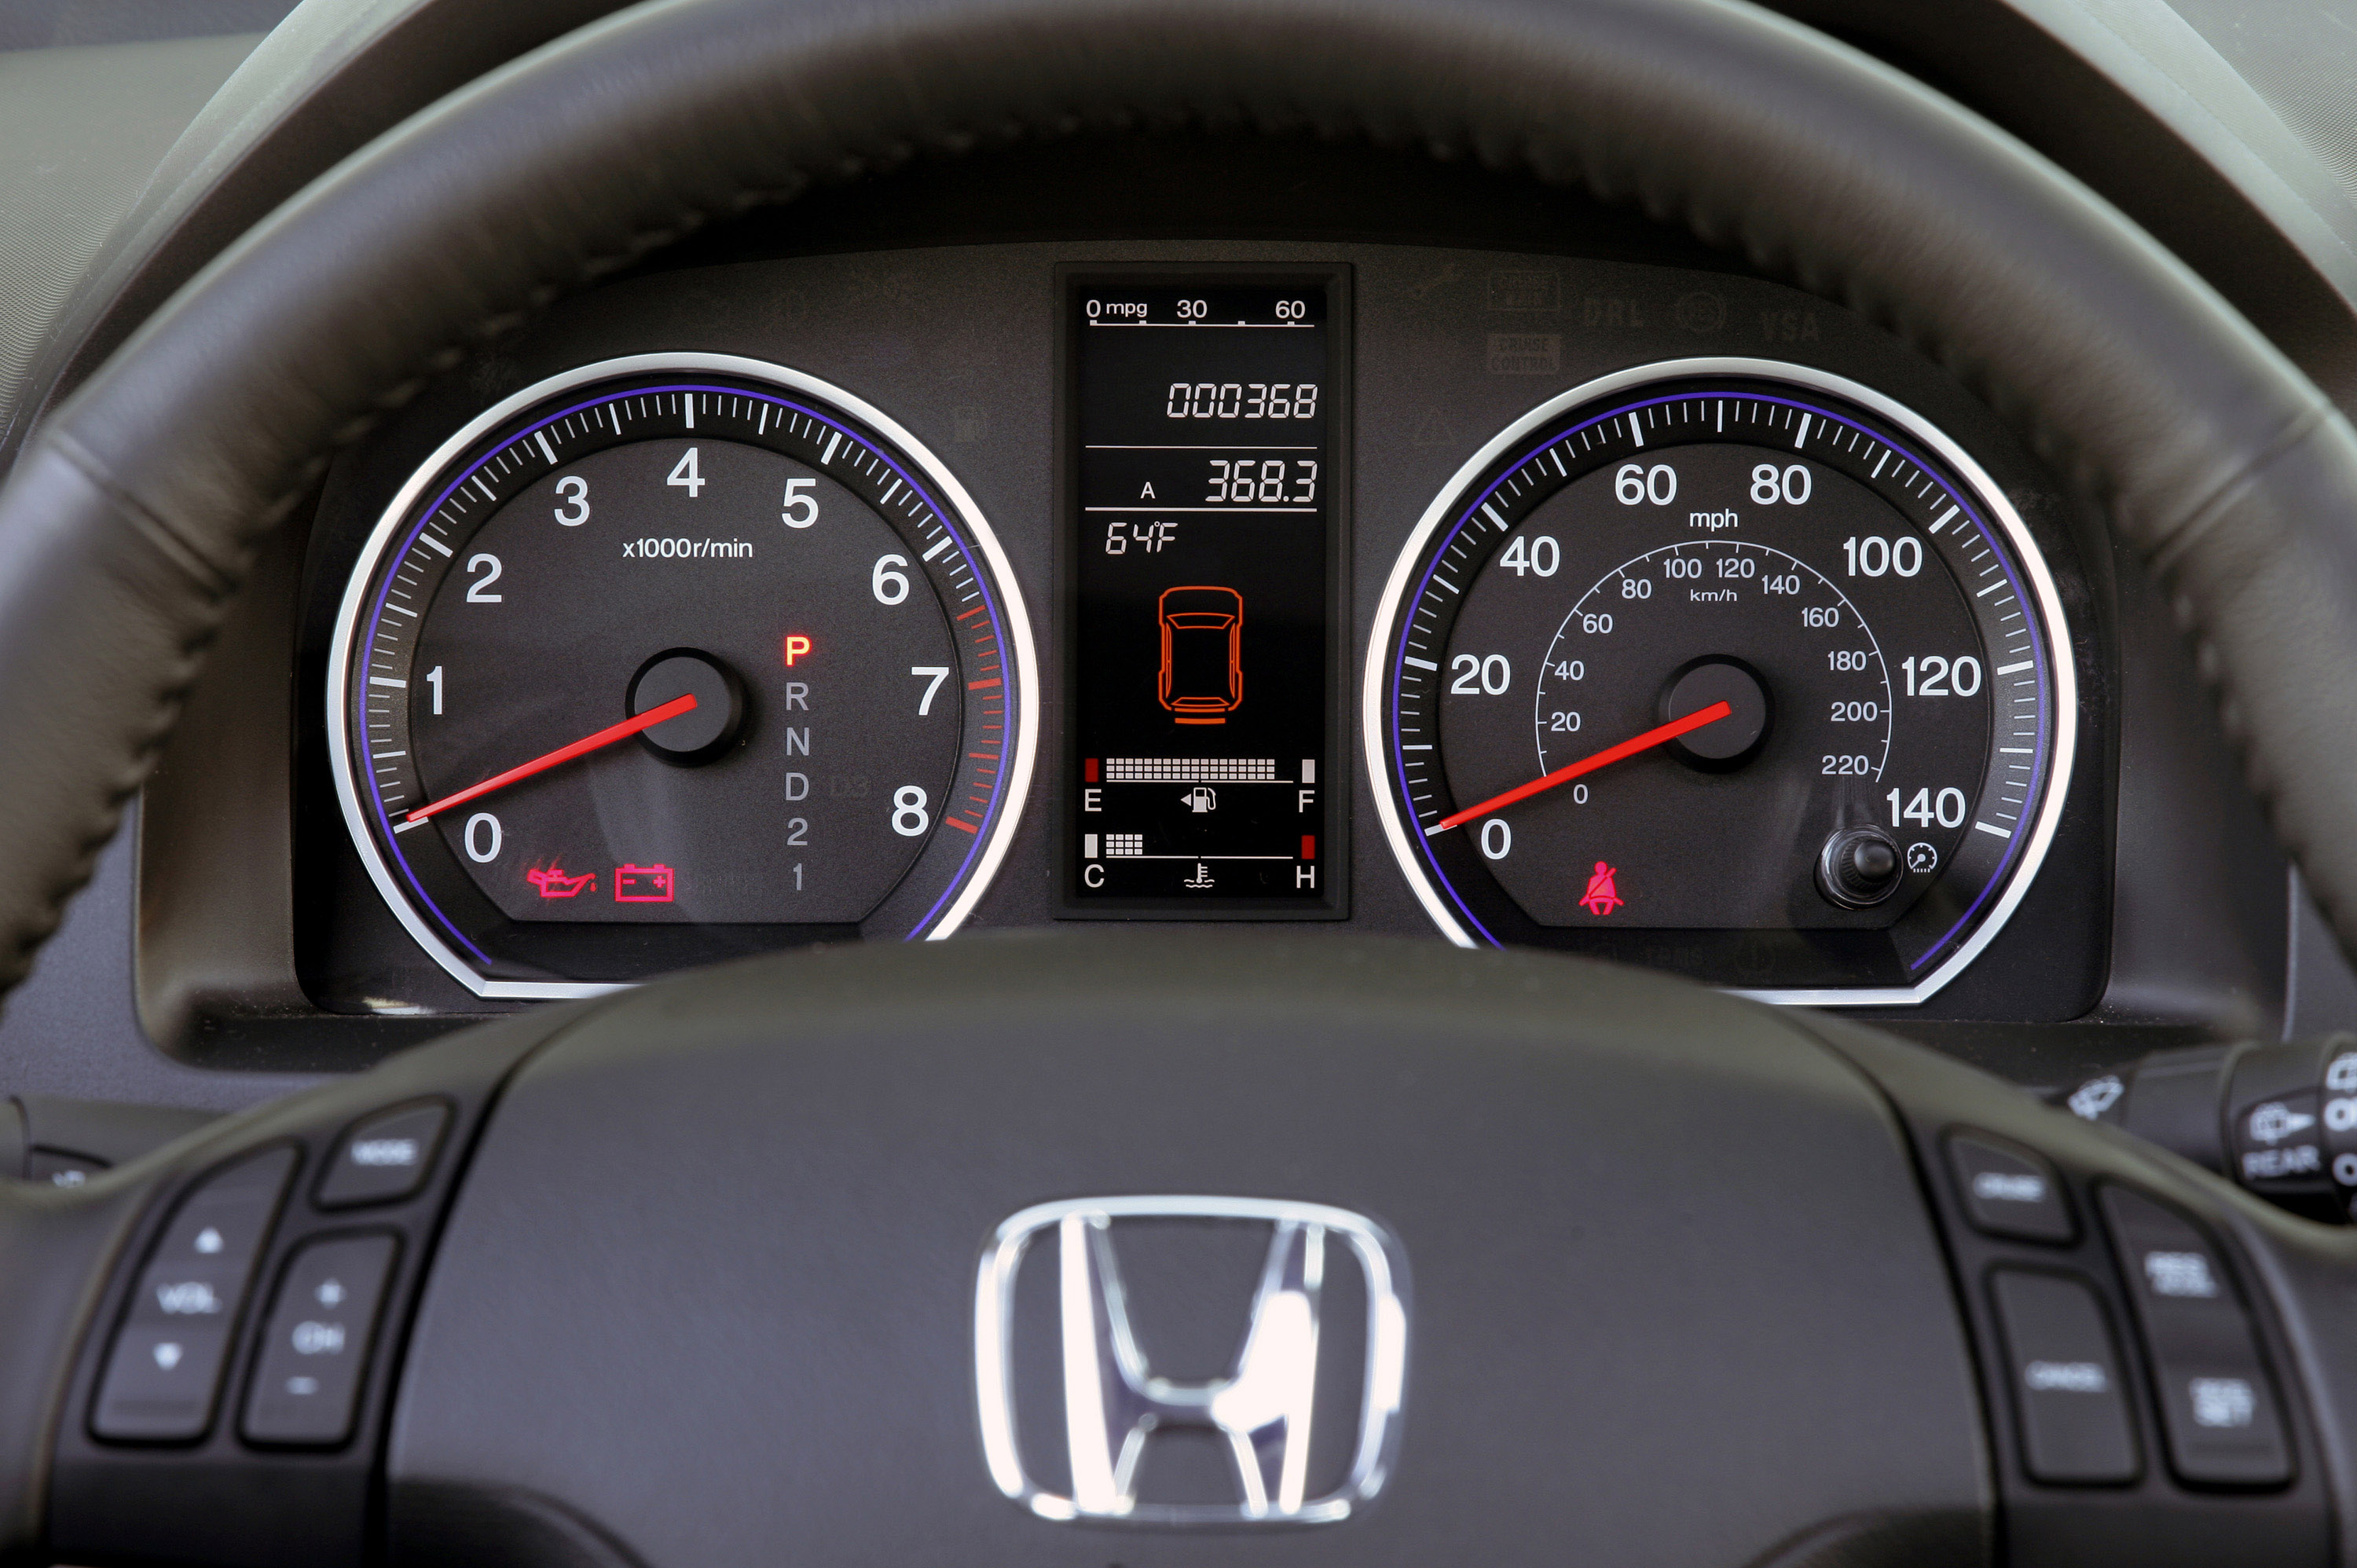 Honda cr панель. Хонда CRV 2008 года панель приборов. Honda CRV 3 приборная панель. Honda CR-V 2008 приборная панель. Панель Honda CRV 3 поколение.